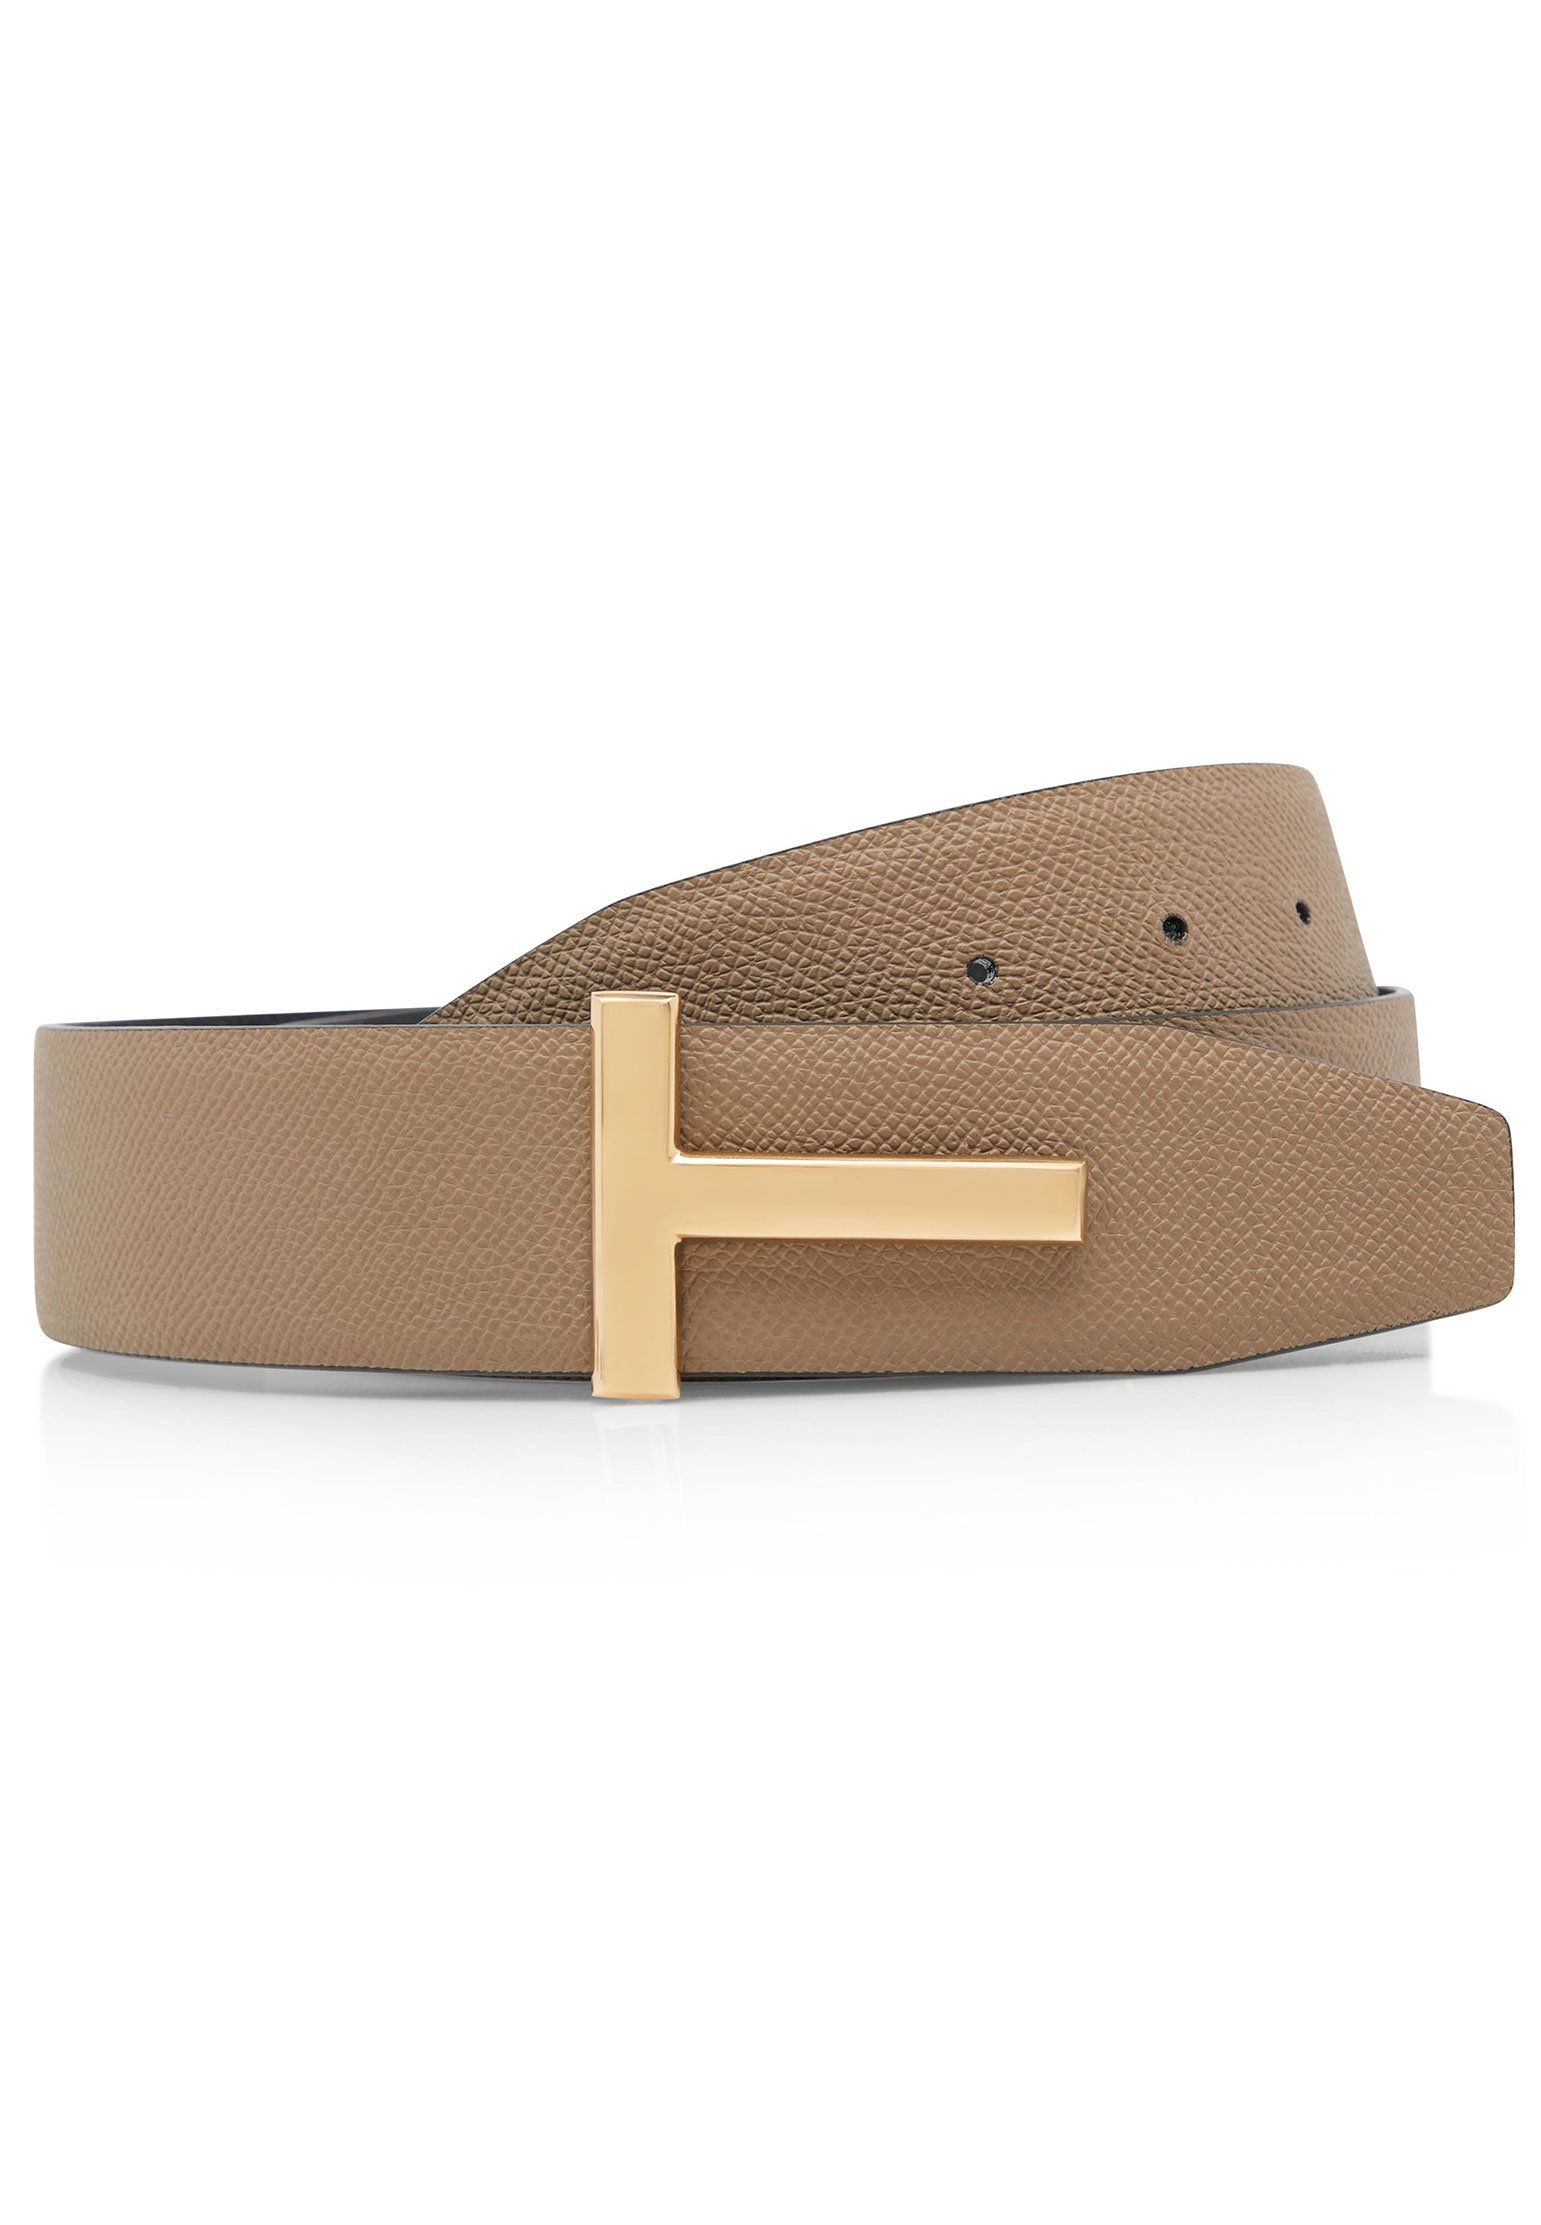 Leather belt TOM FORD Color: beige (Code: 230) in online store Allure